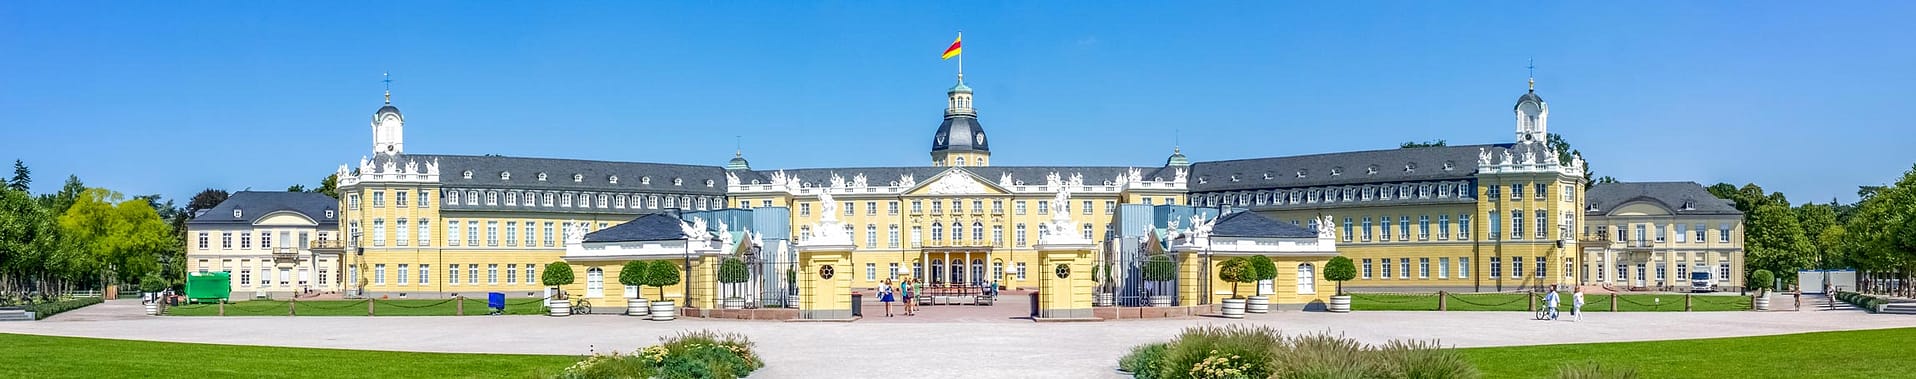 Karlsruher Schloss in Panoramaansicht